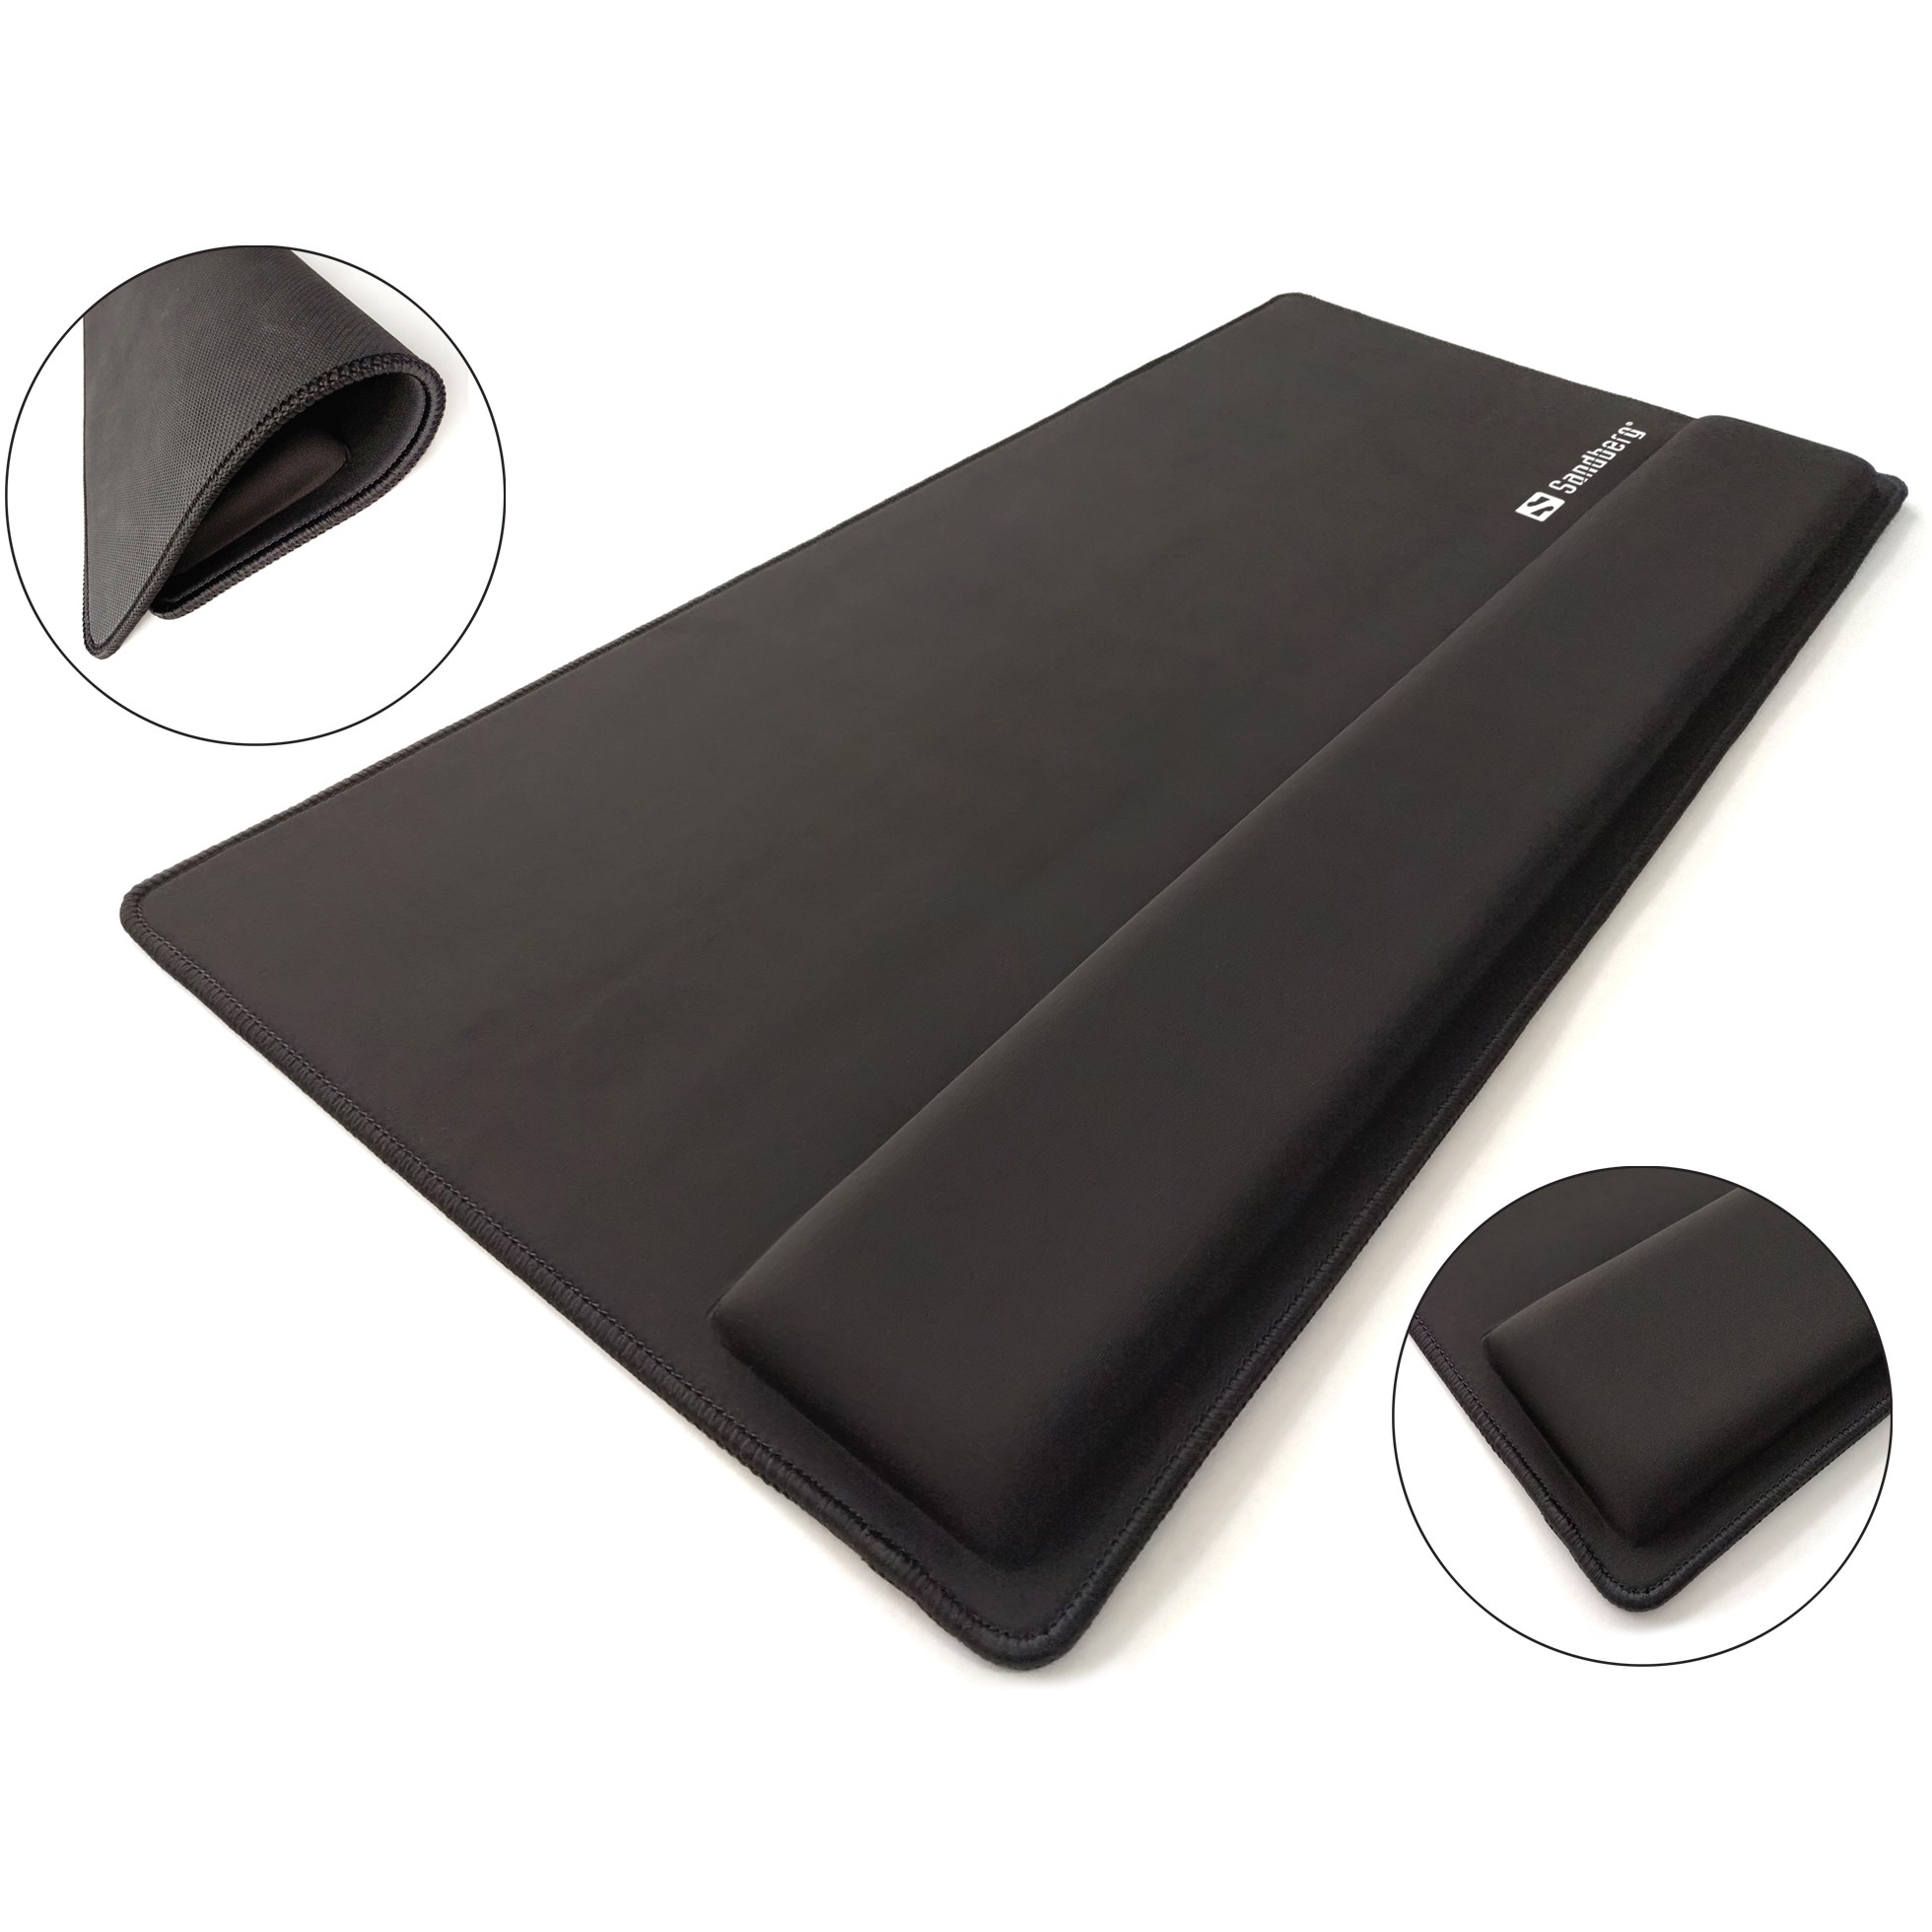 Sandberg 520-35 mouse pad